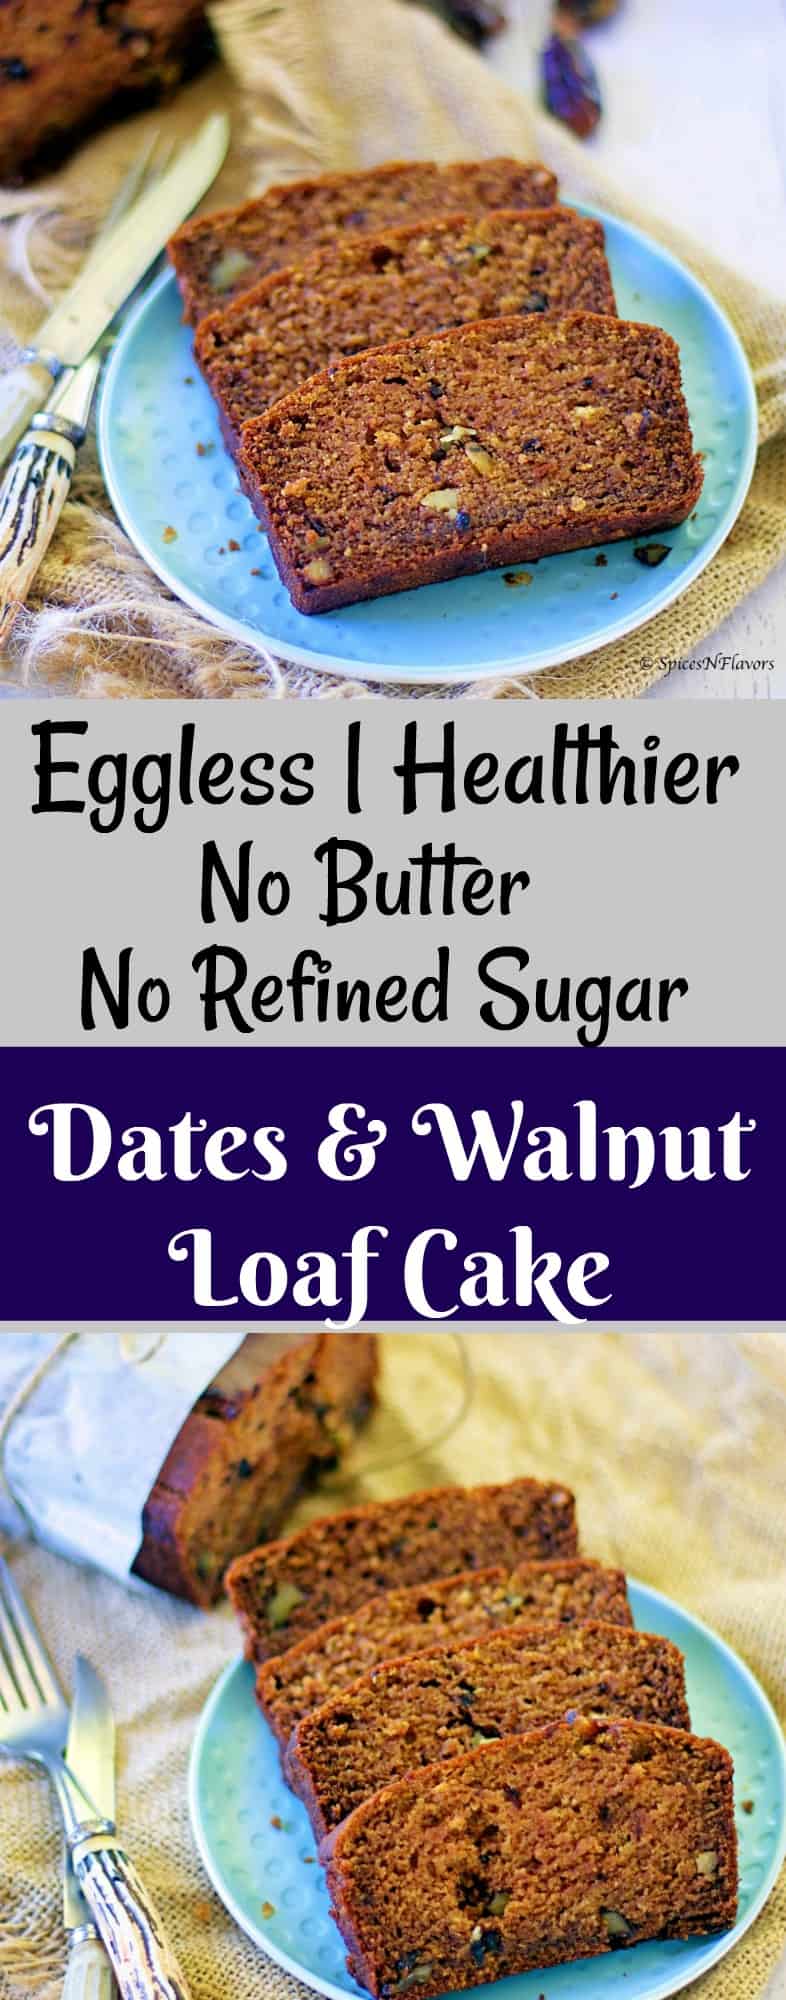 dates and walnut cake, healthy eggless cake, no sugar cake, dates and walnut loaf cake, loaf cake photography eggless loaf cake tea time cakes diabetic friendly cake whole wheat cake